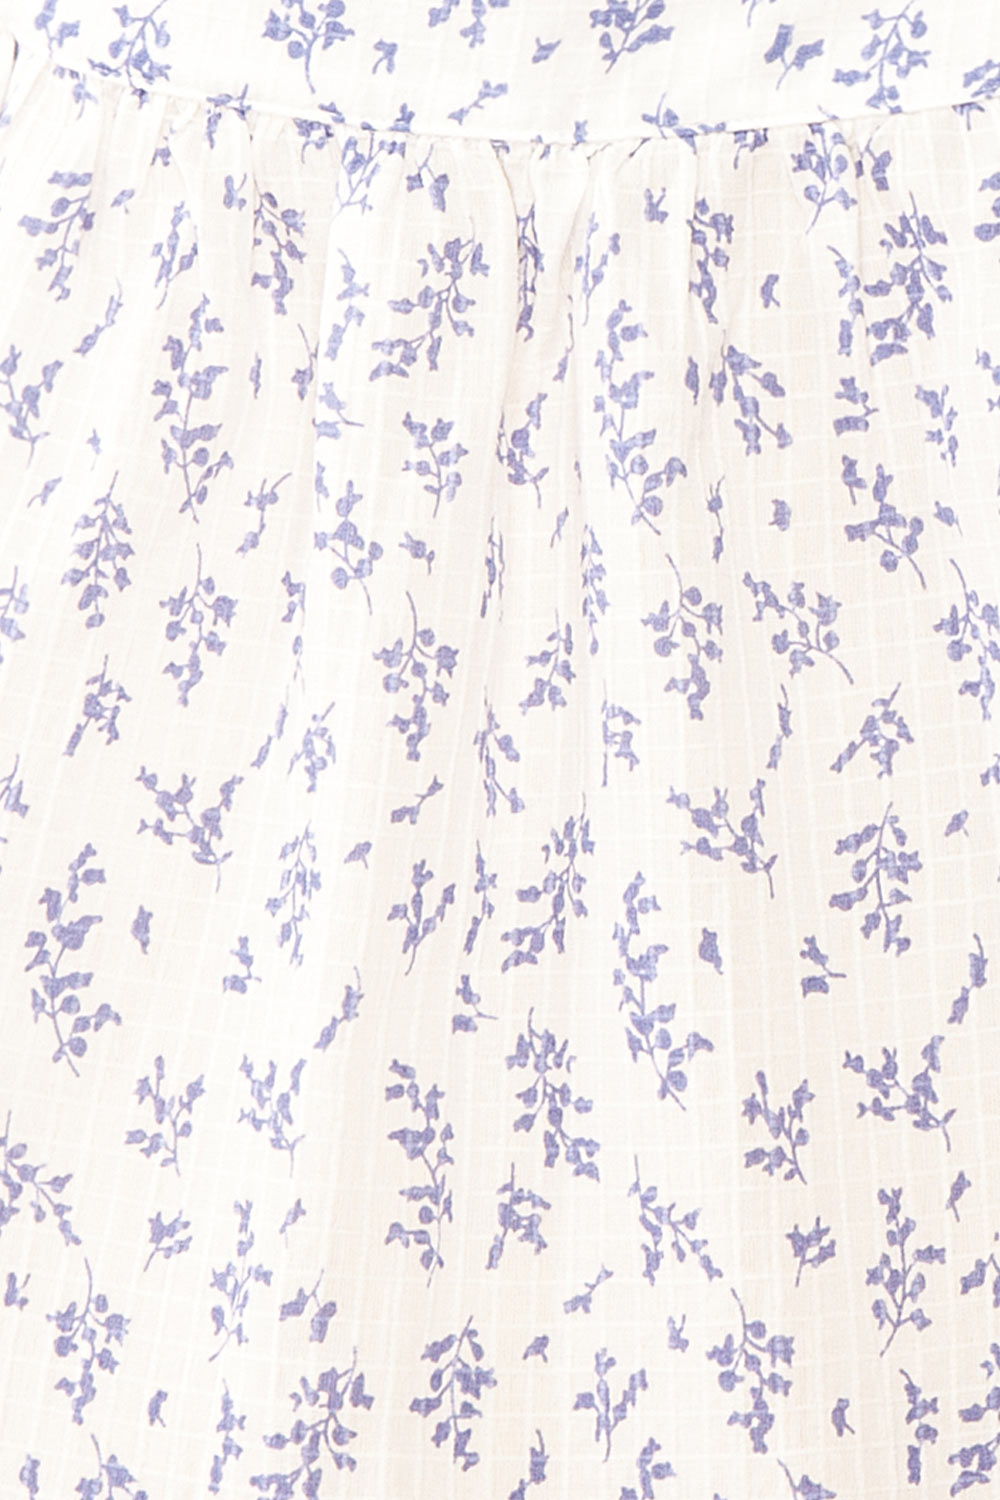 Lockette Loose Floral Top | Boutique 1861 fabric 